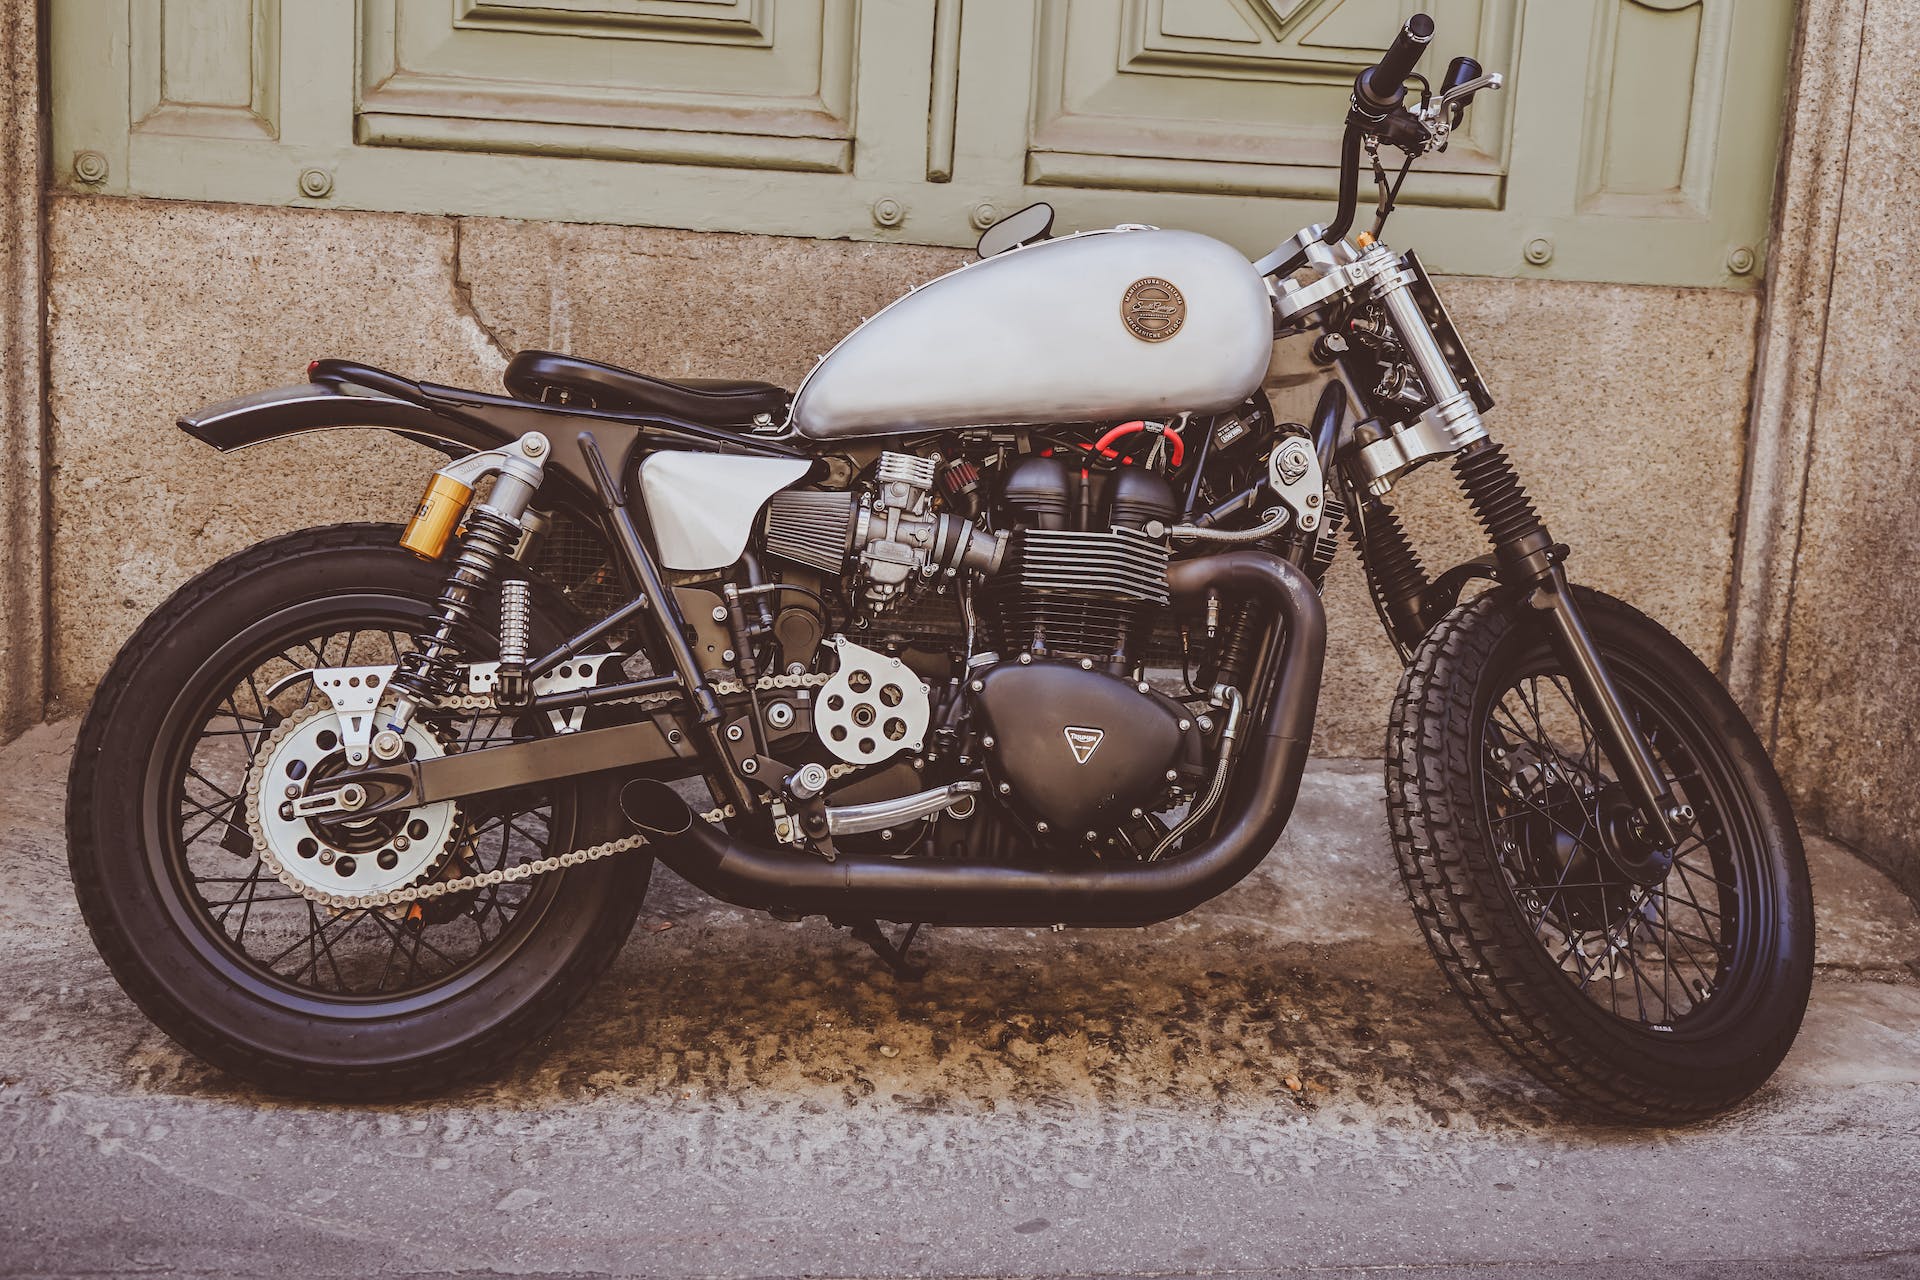 A motorcycle | Source: Pexels